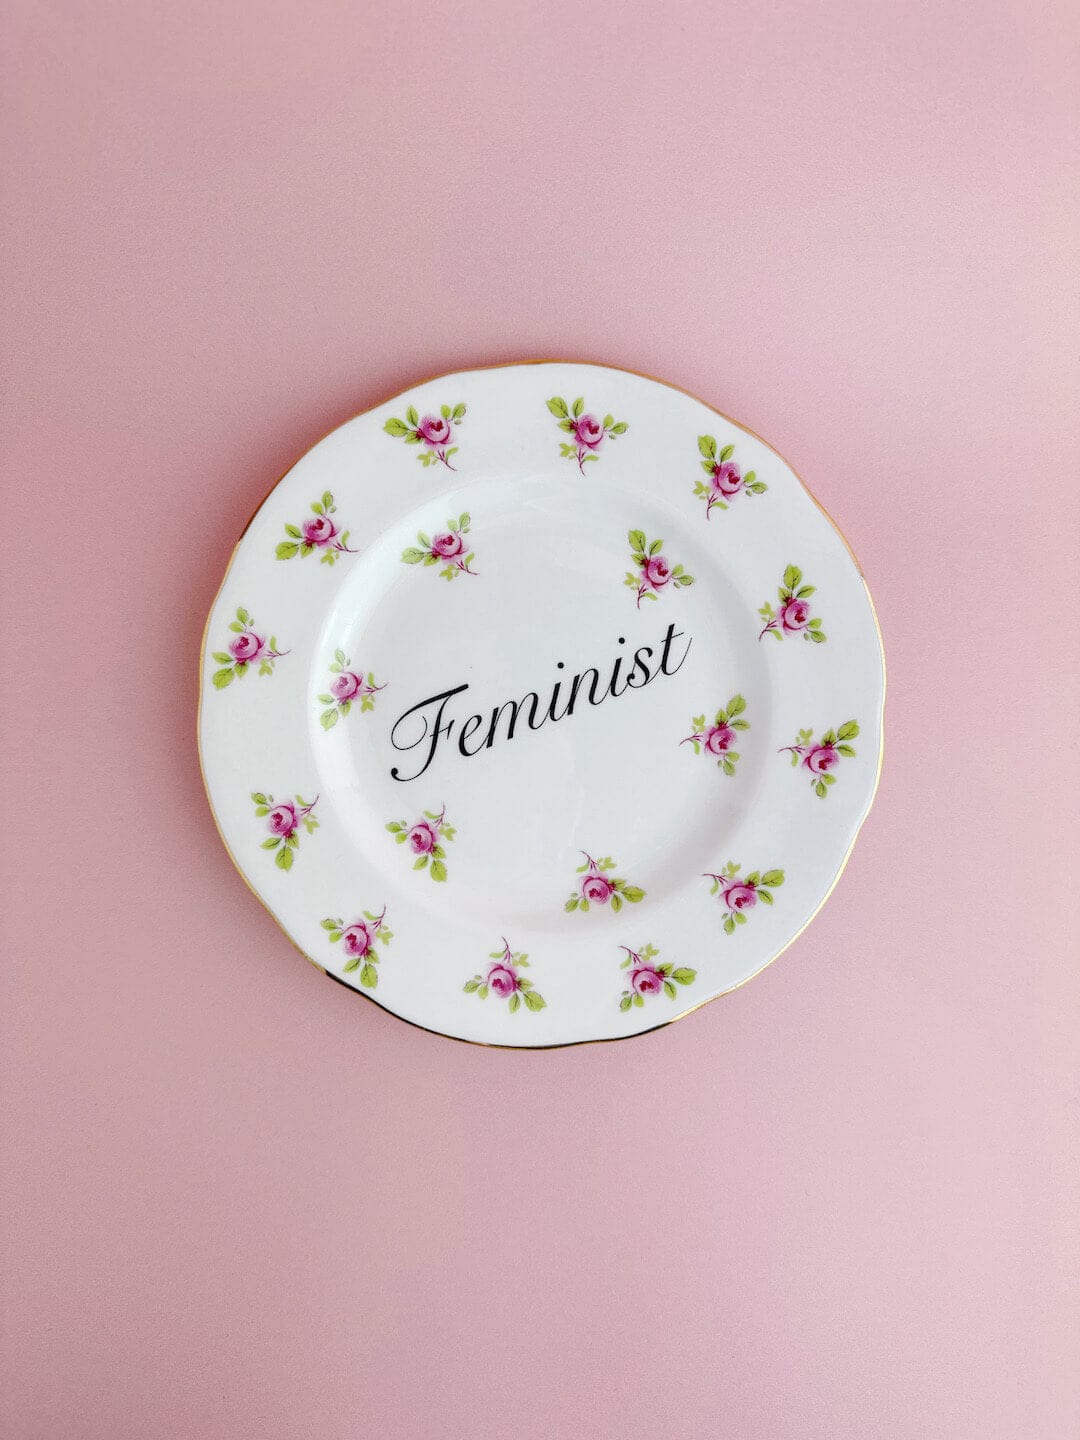 Beau & Badger Ceramics #93 Decorative Wall Plate - Feminist (multiple designs)